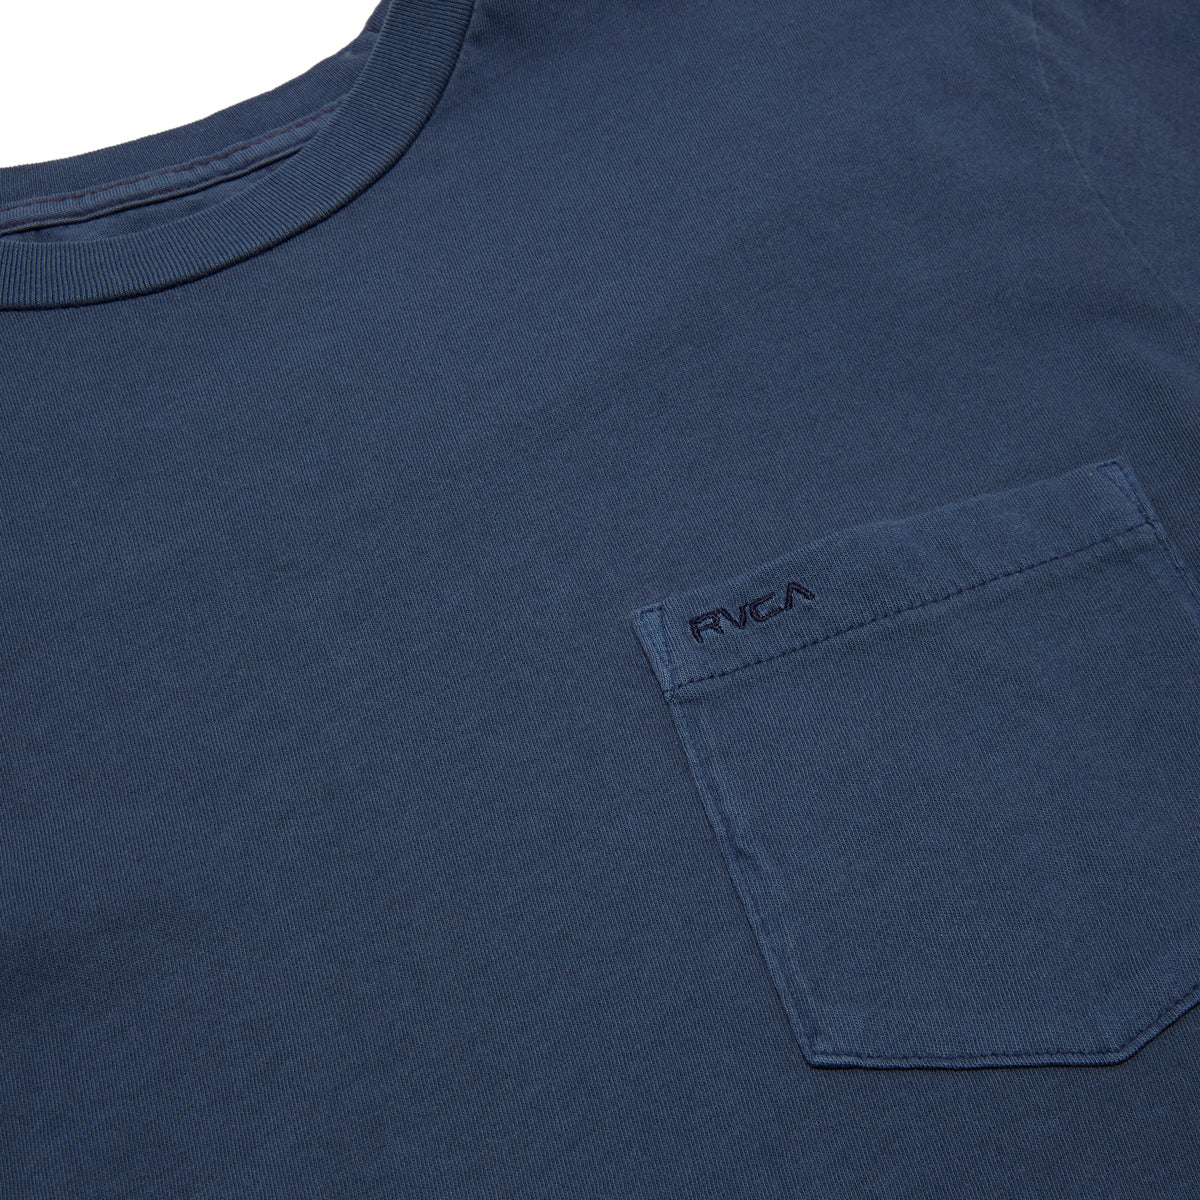 RVCA Ptc 2 Pigment T-Shirt - Moody Blue image 2